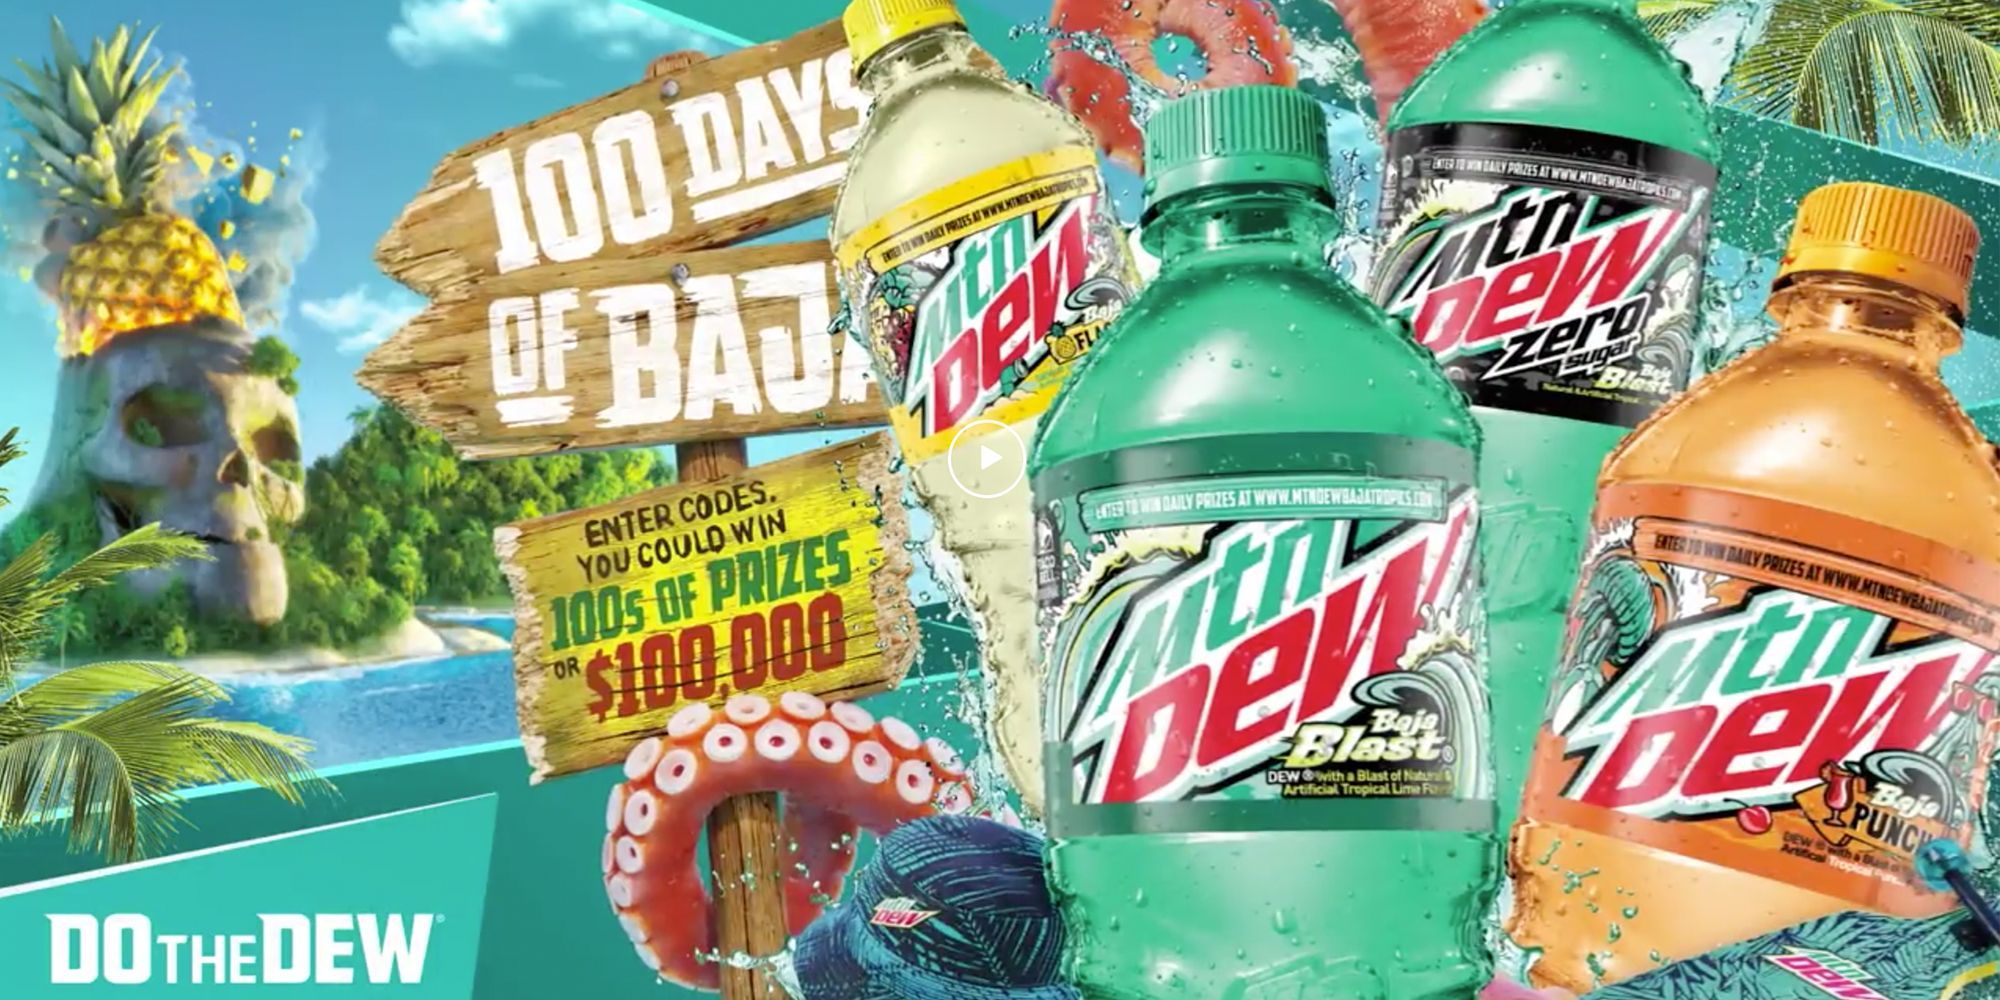 PepsiCo releases two new Mtn Dew Baja Blast flavors, 2021-06-09